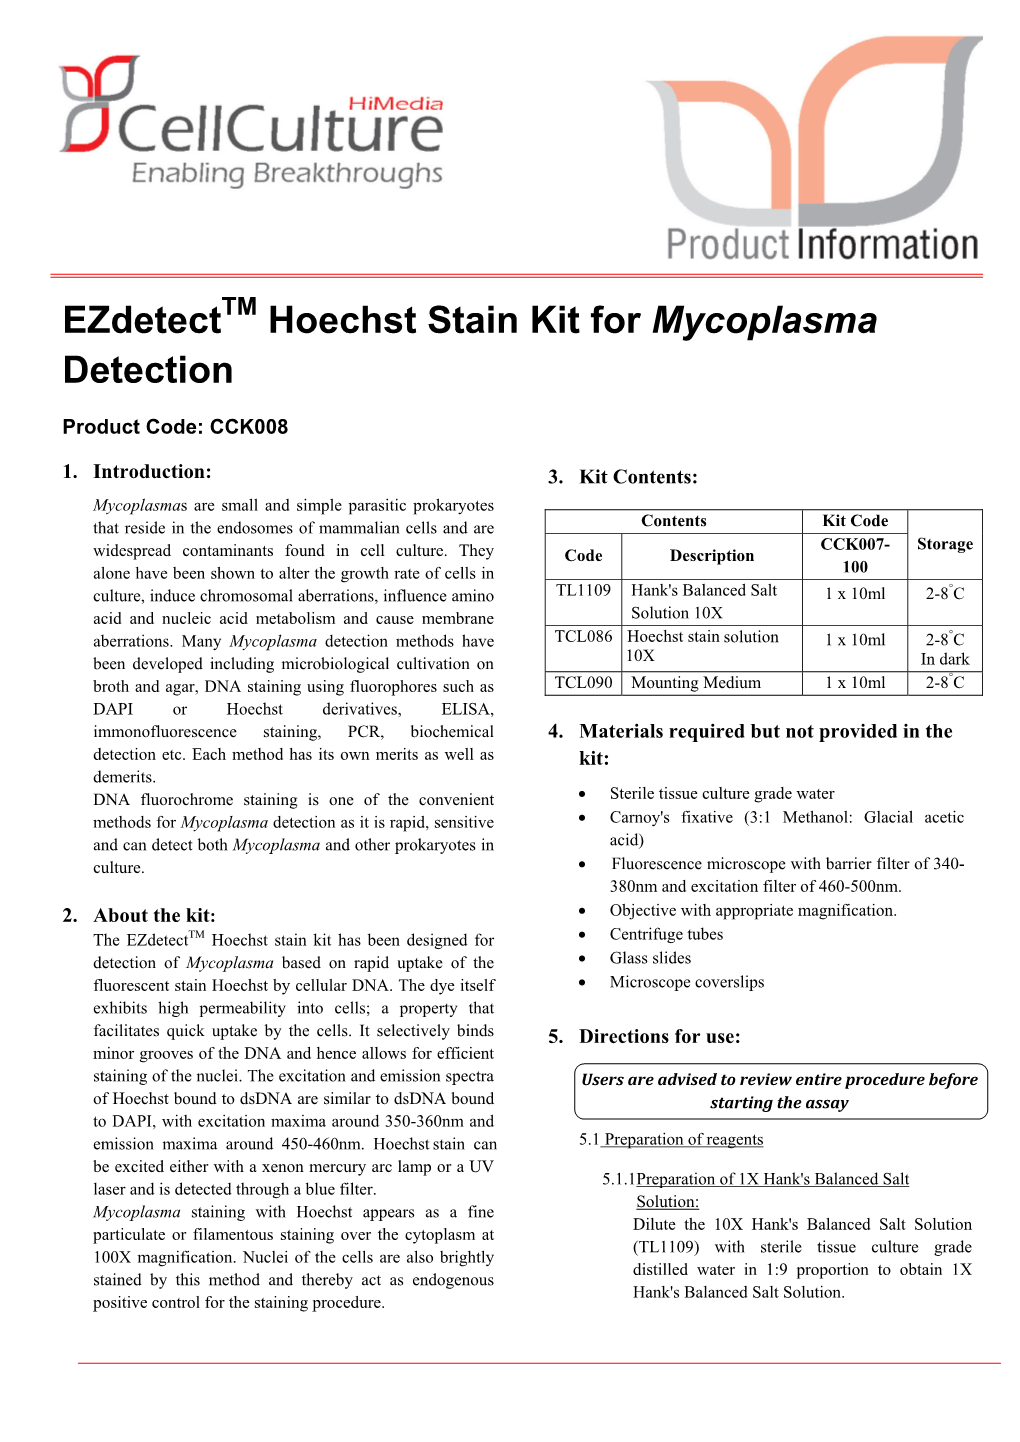 Ezdetect Hoechst Stain Kit for Mycoplasma Detection